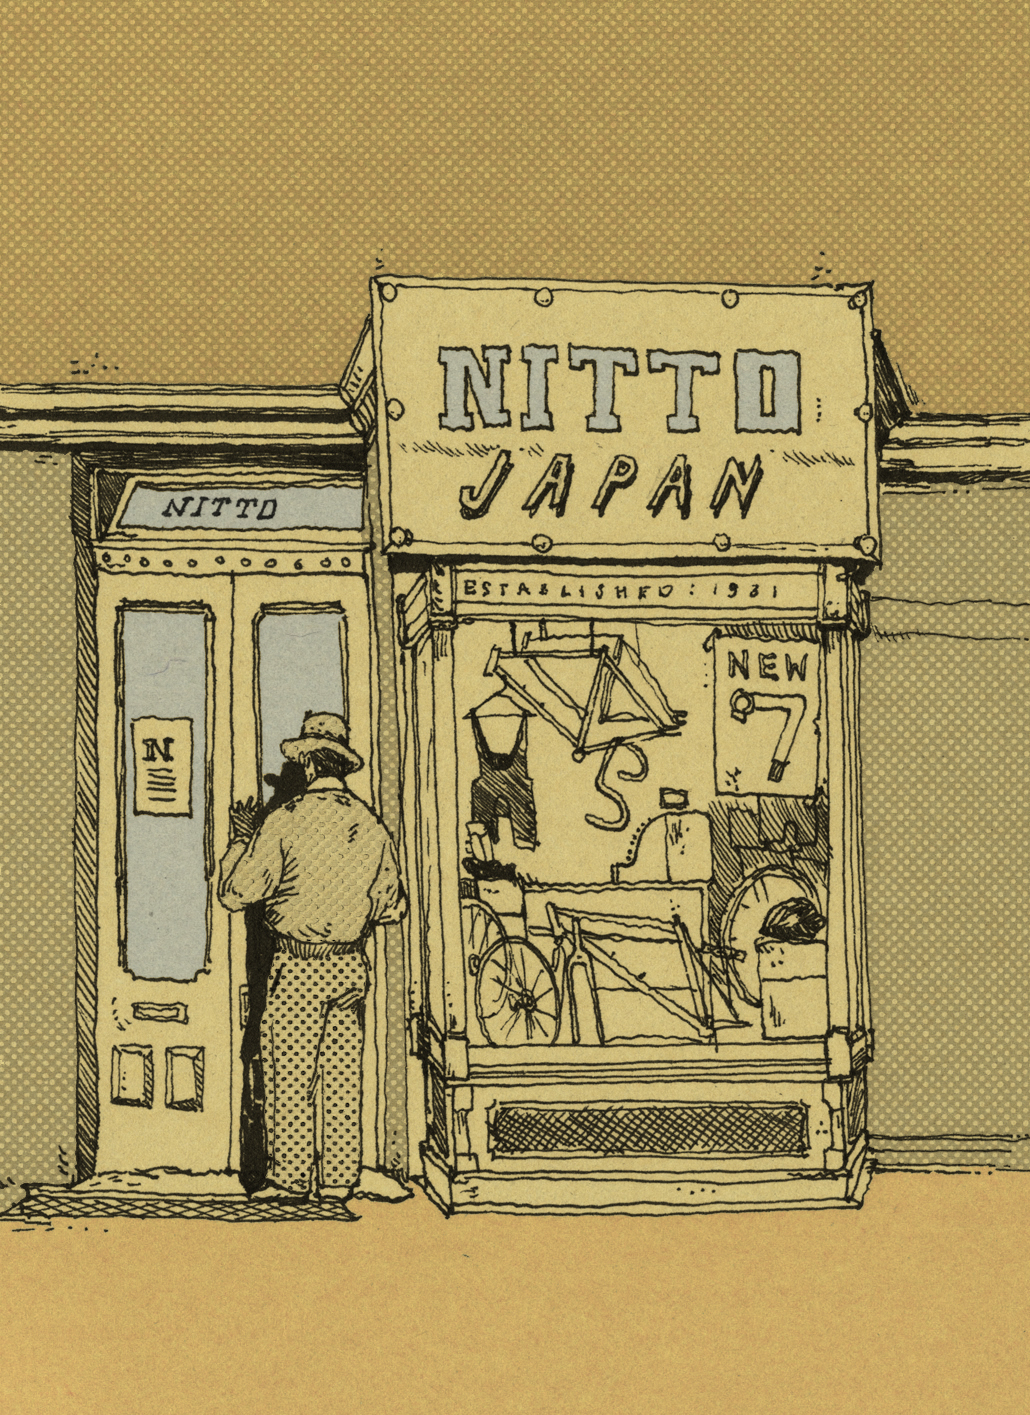 Nitto Shop Japan